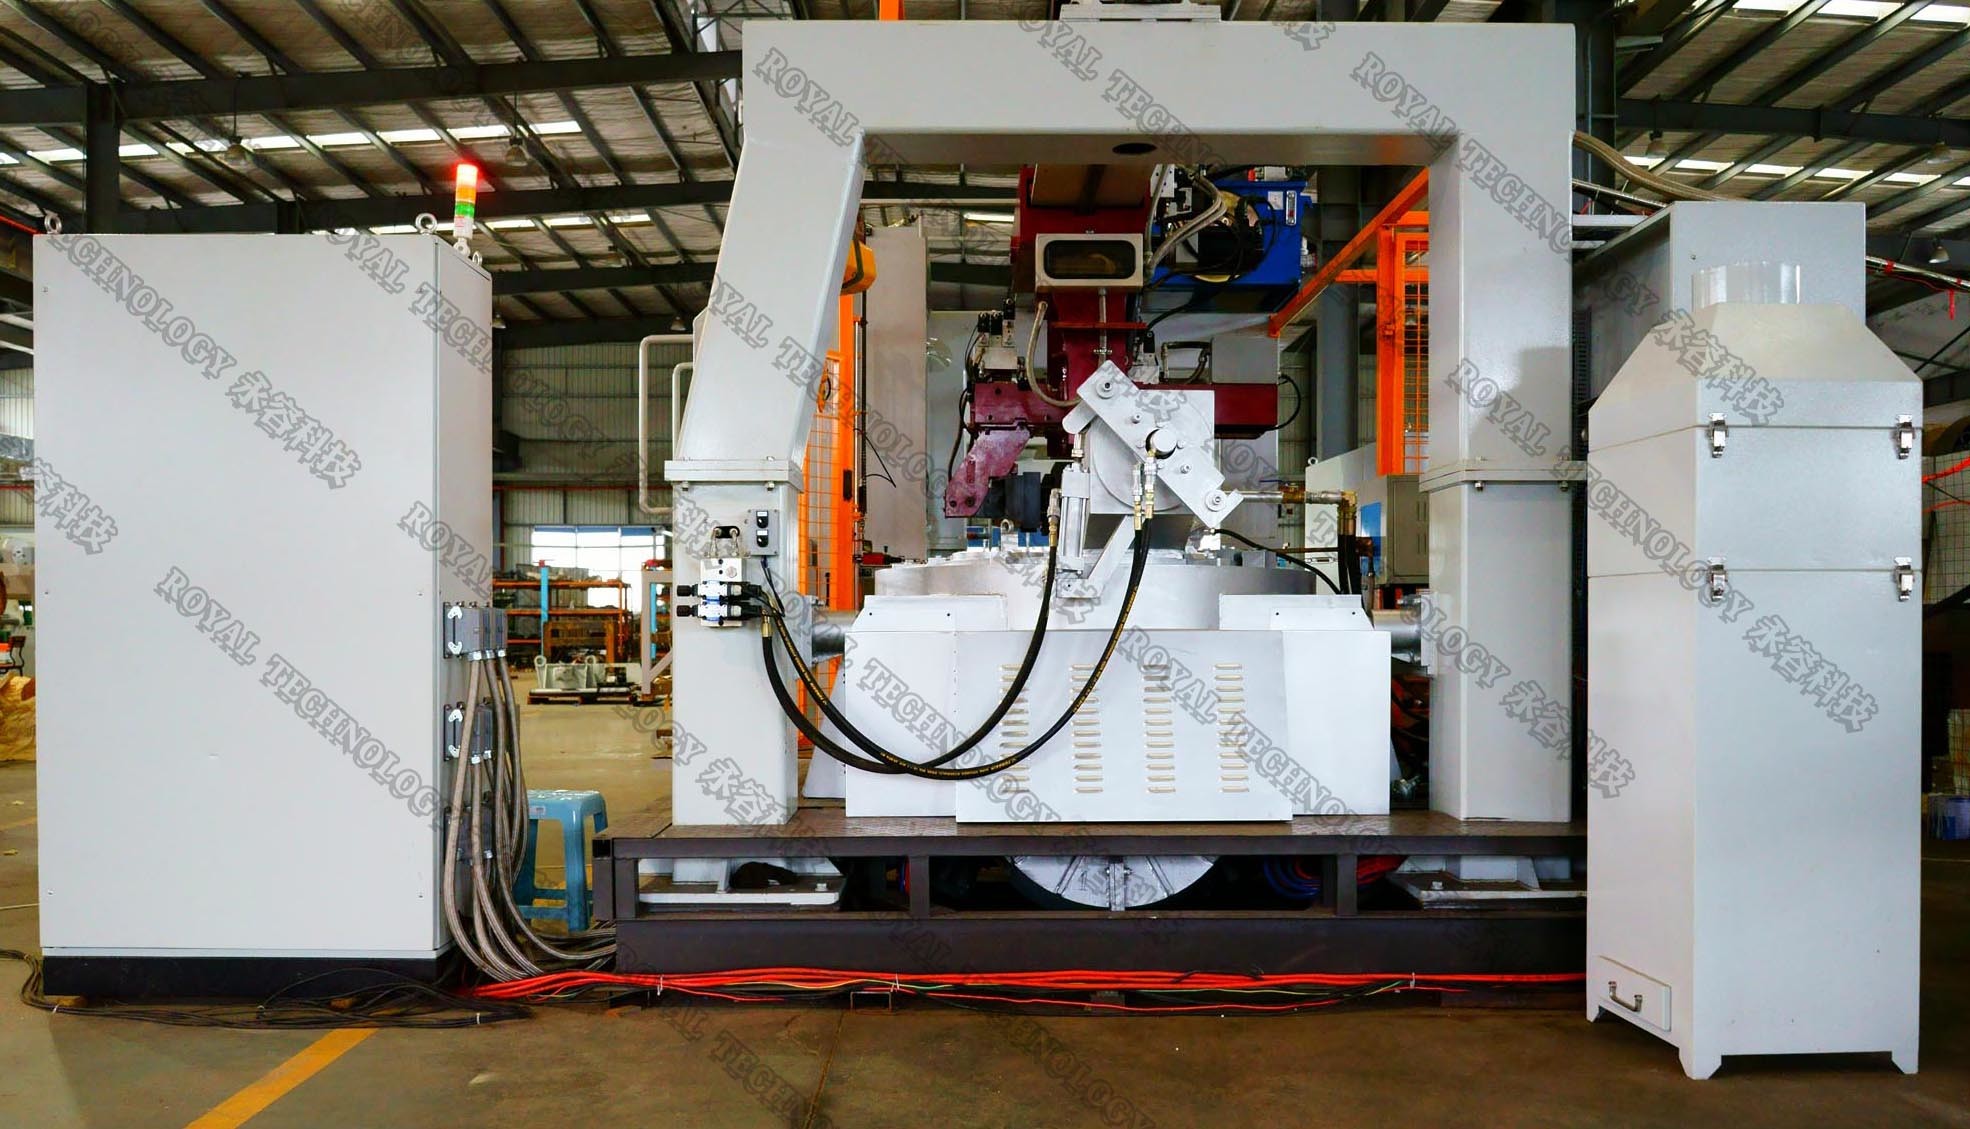 2 Manipulators Low Pressure Die Casting Machine For Brass / Zinc Alloy Products